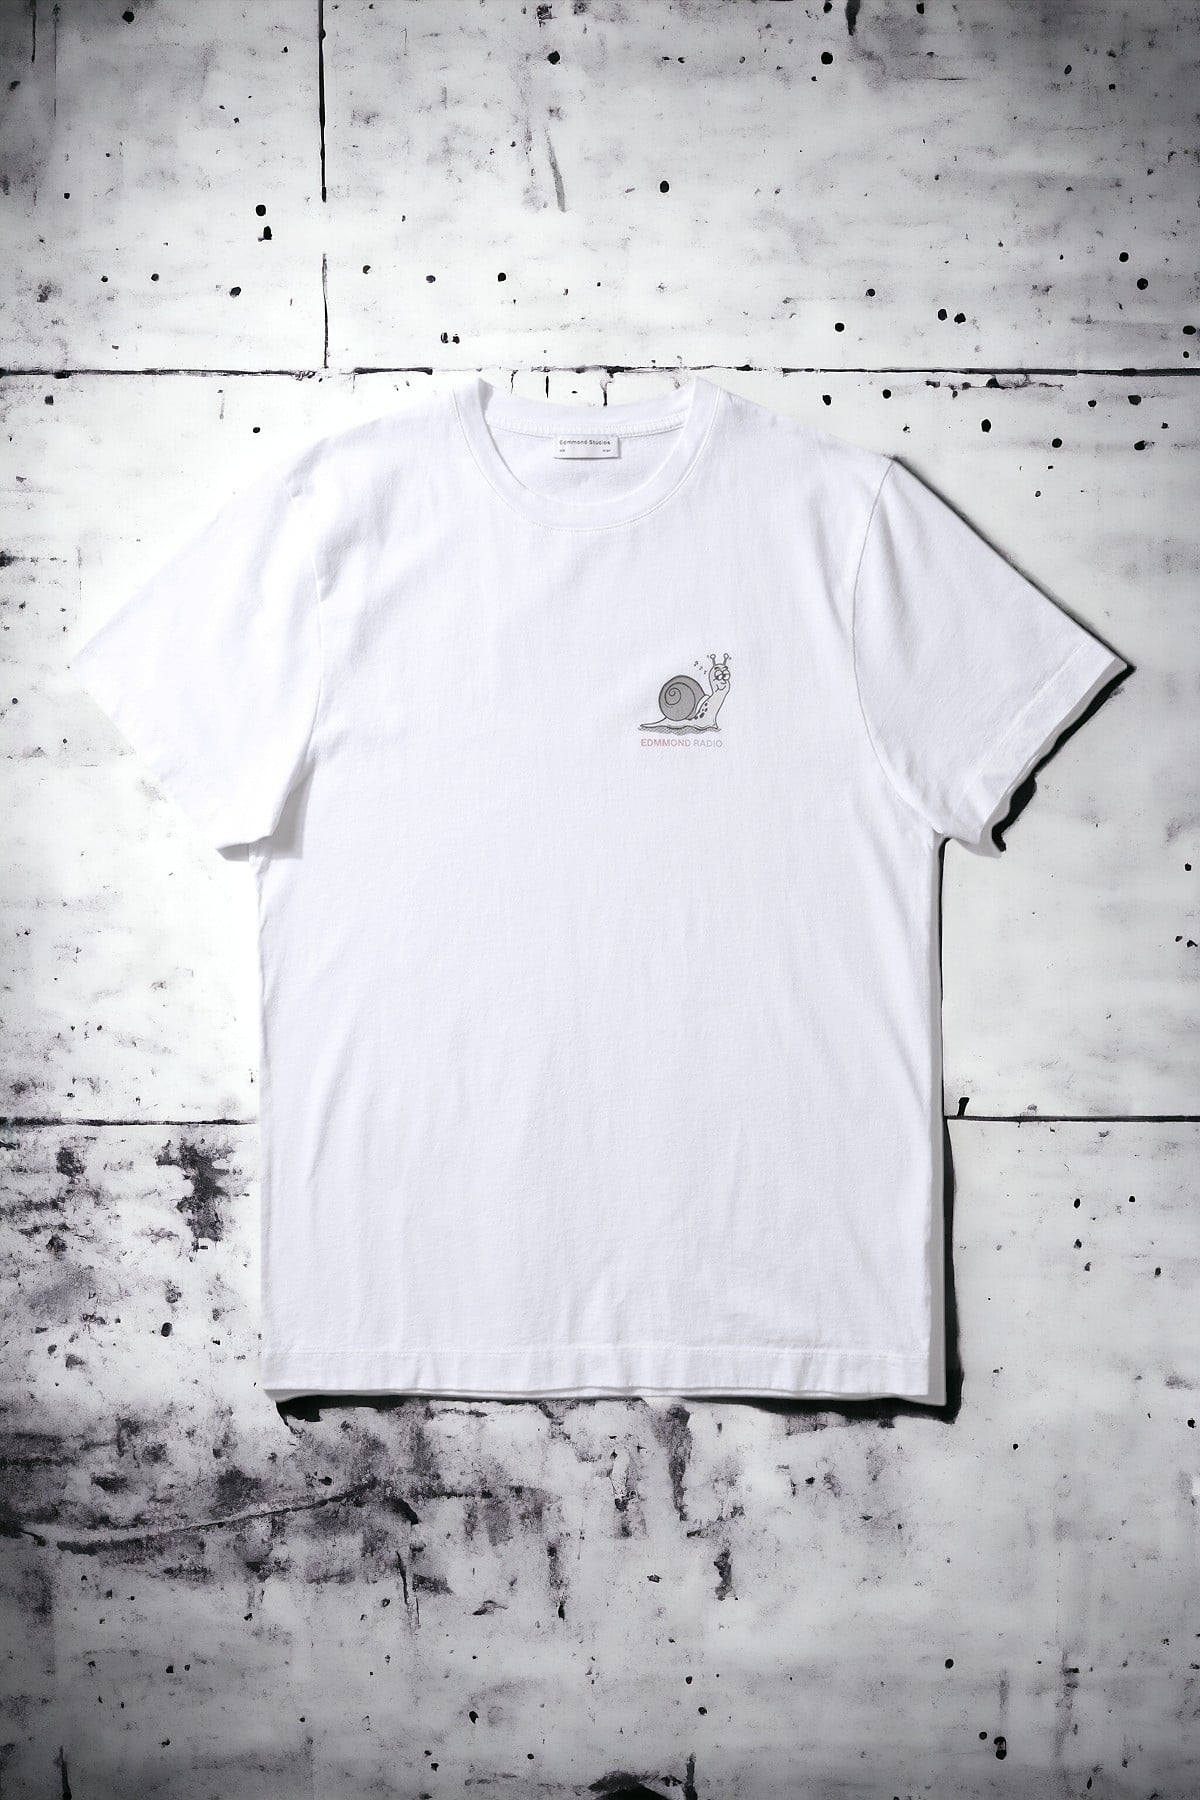 Camiseta Slime plain white